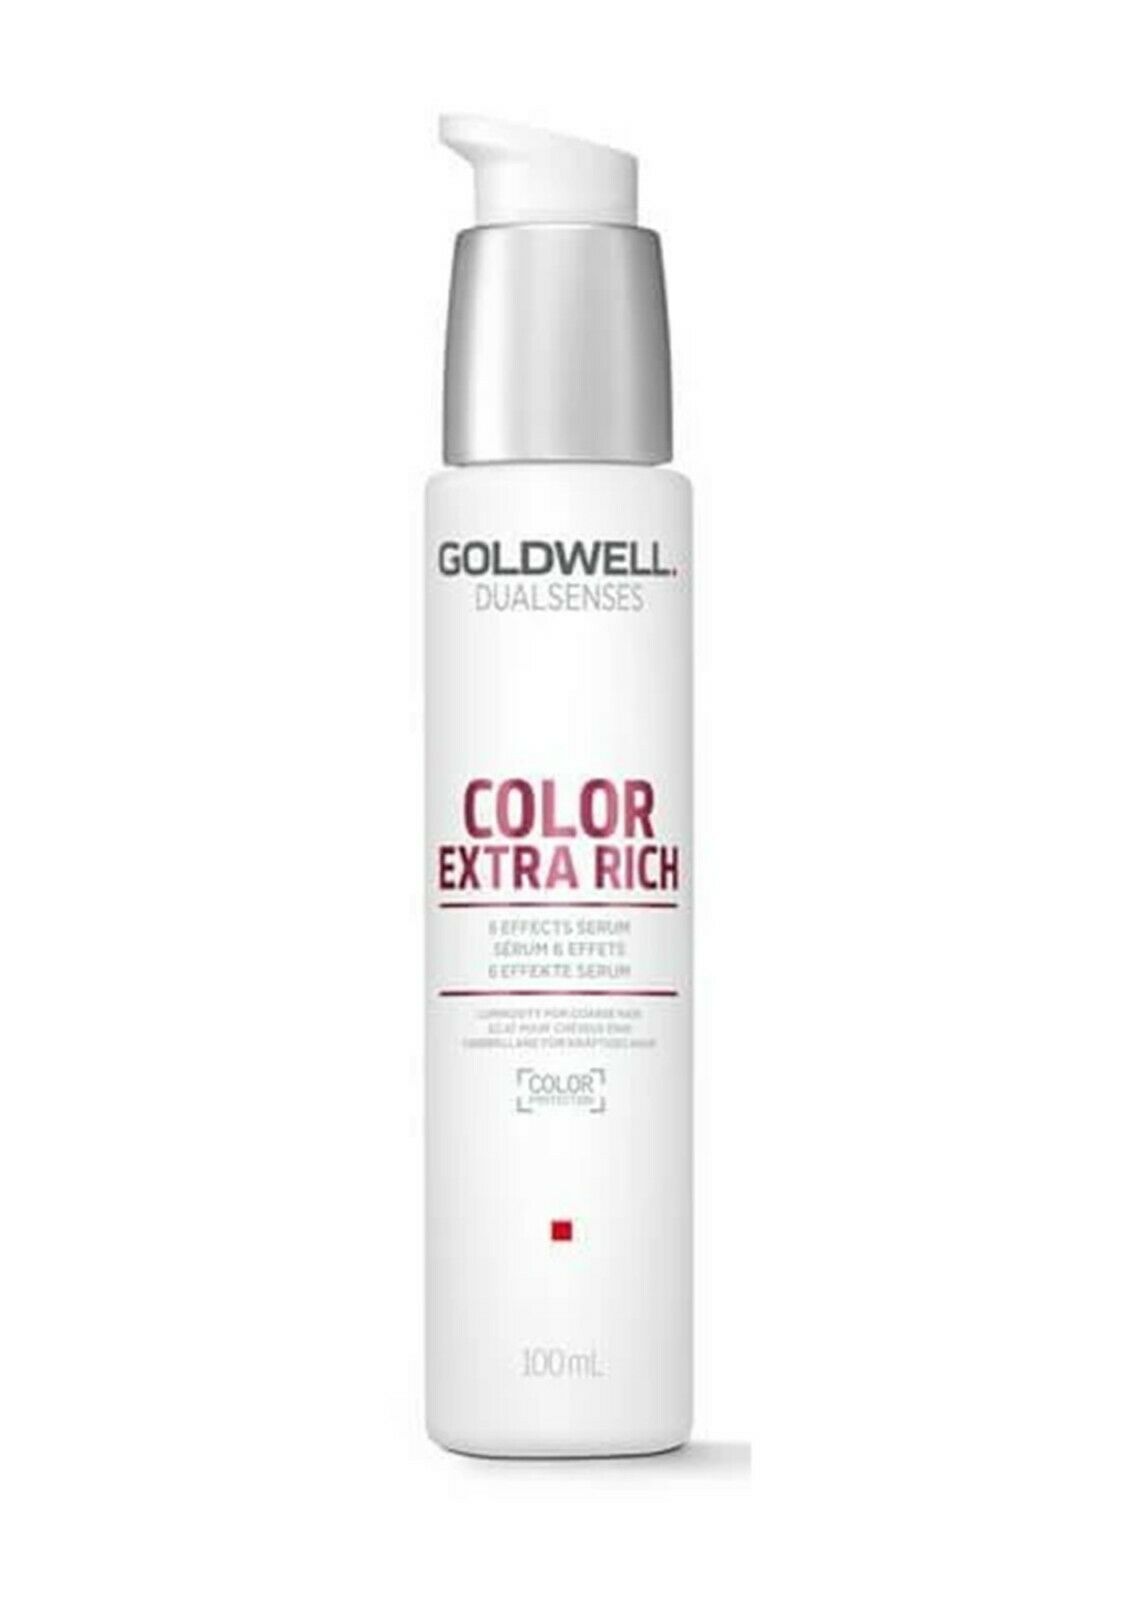 iaahhaircare,Goldwell Goldwell DualSenses Color Extra Rich 6 Effects Serum - 100ml,Serum & Oils,Goldwell